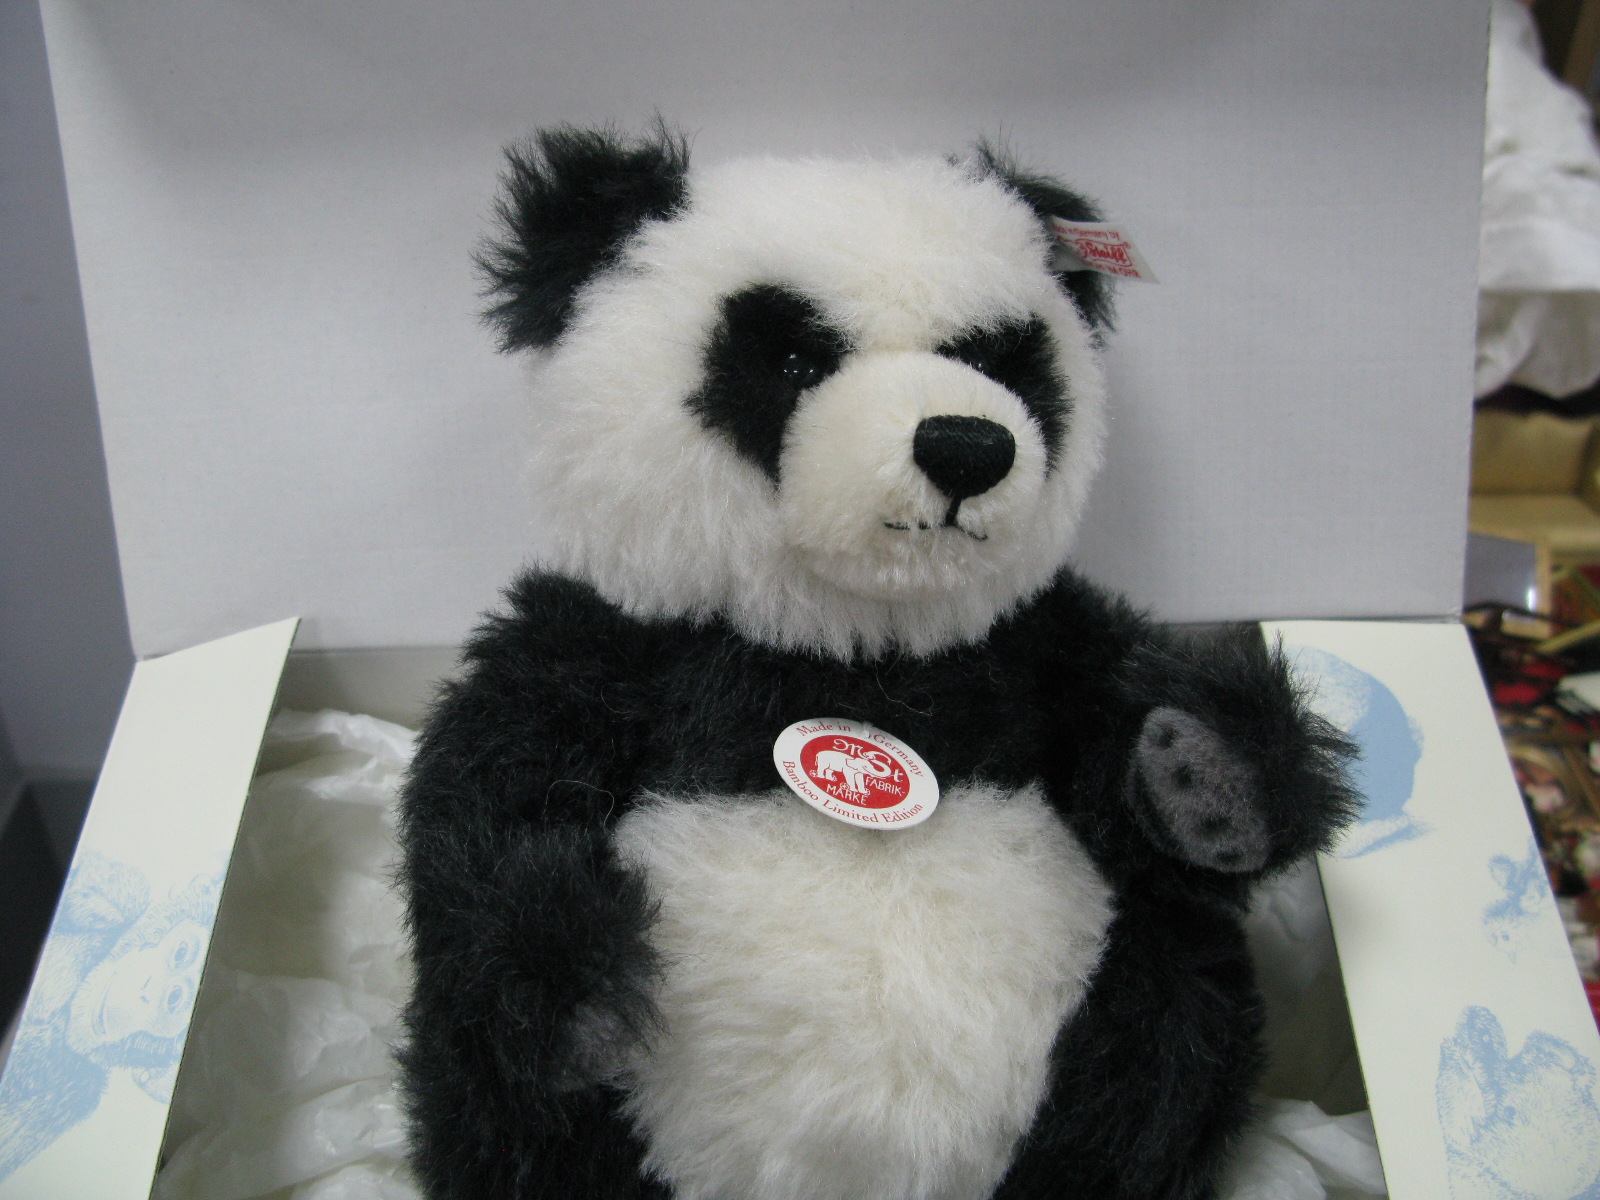 A Modern Steiff Teddy Bear Panda Bamboo, black and white, 26cm high, No. 722 of 1500, accompanied by